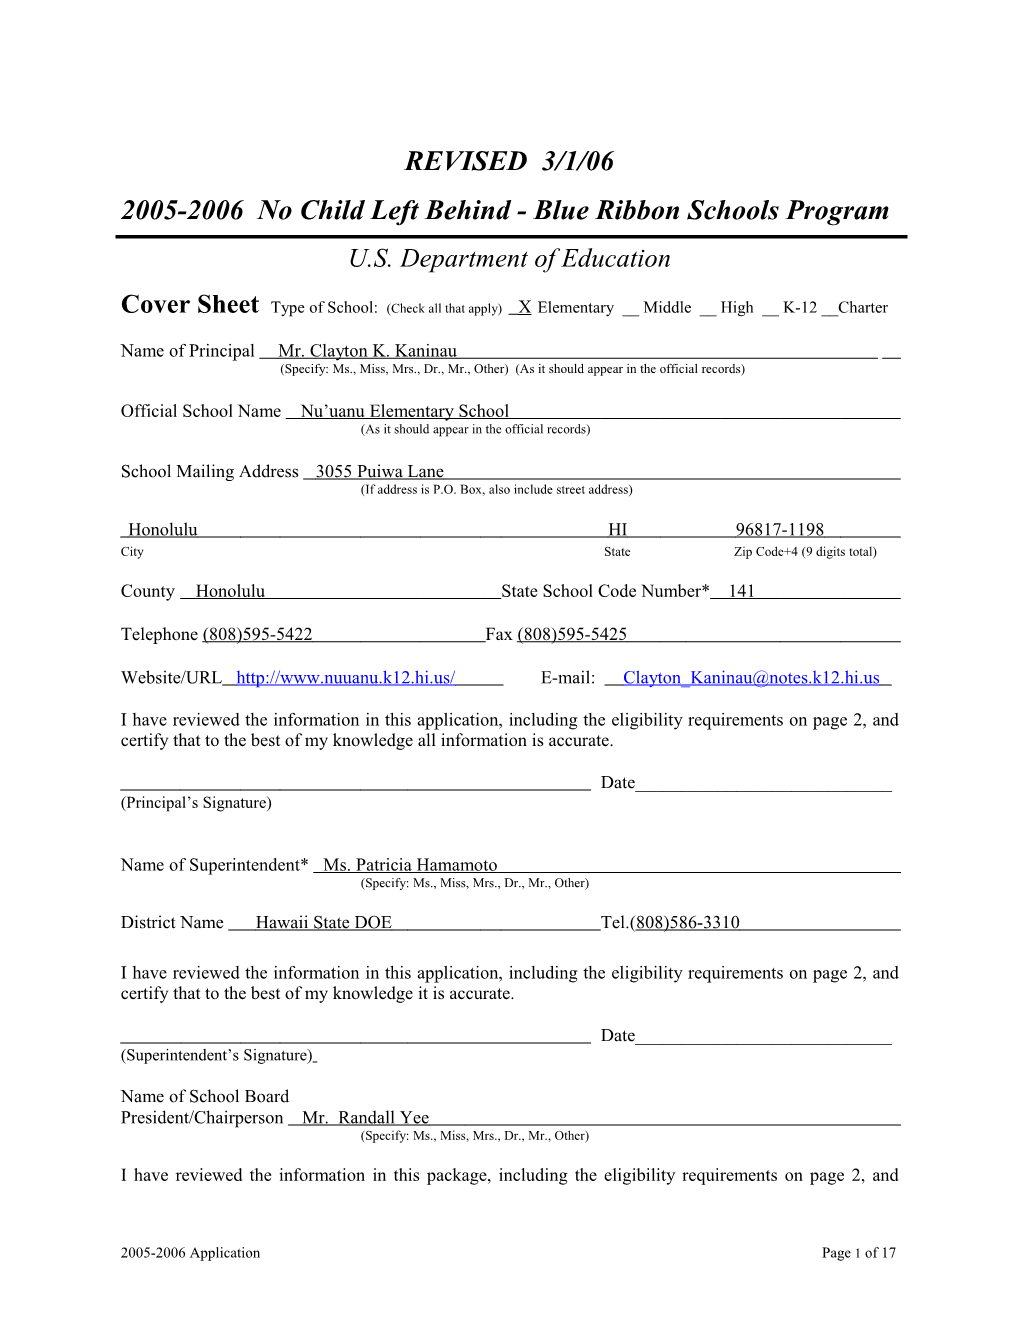 Application: 2005-2006, No Child Left Behind - Blue Ribbon Schools Program (Msword)